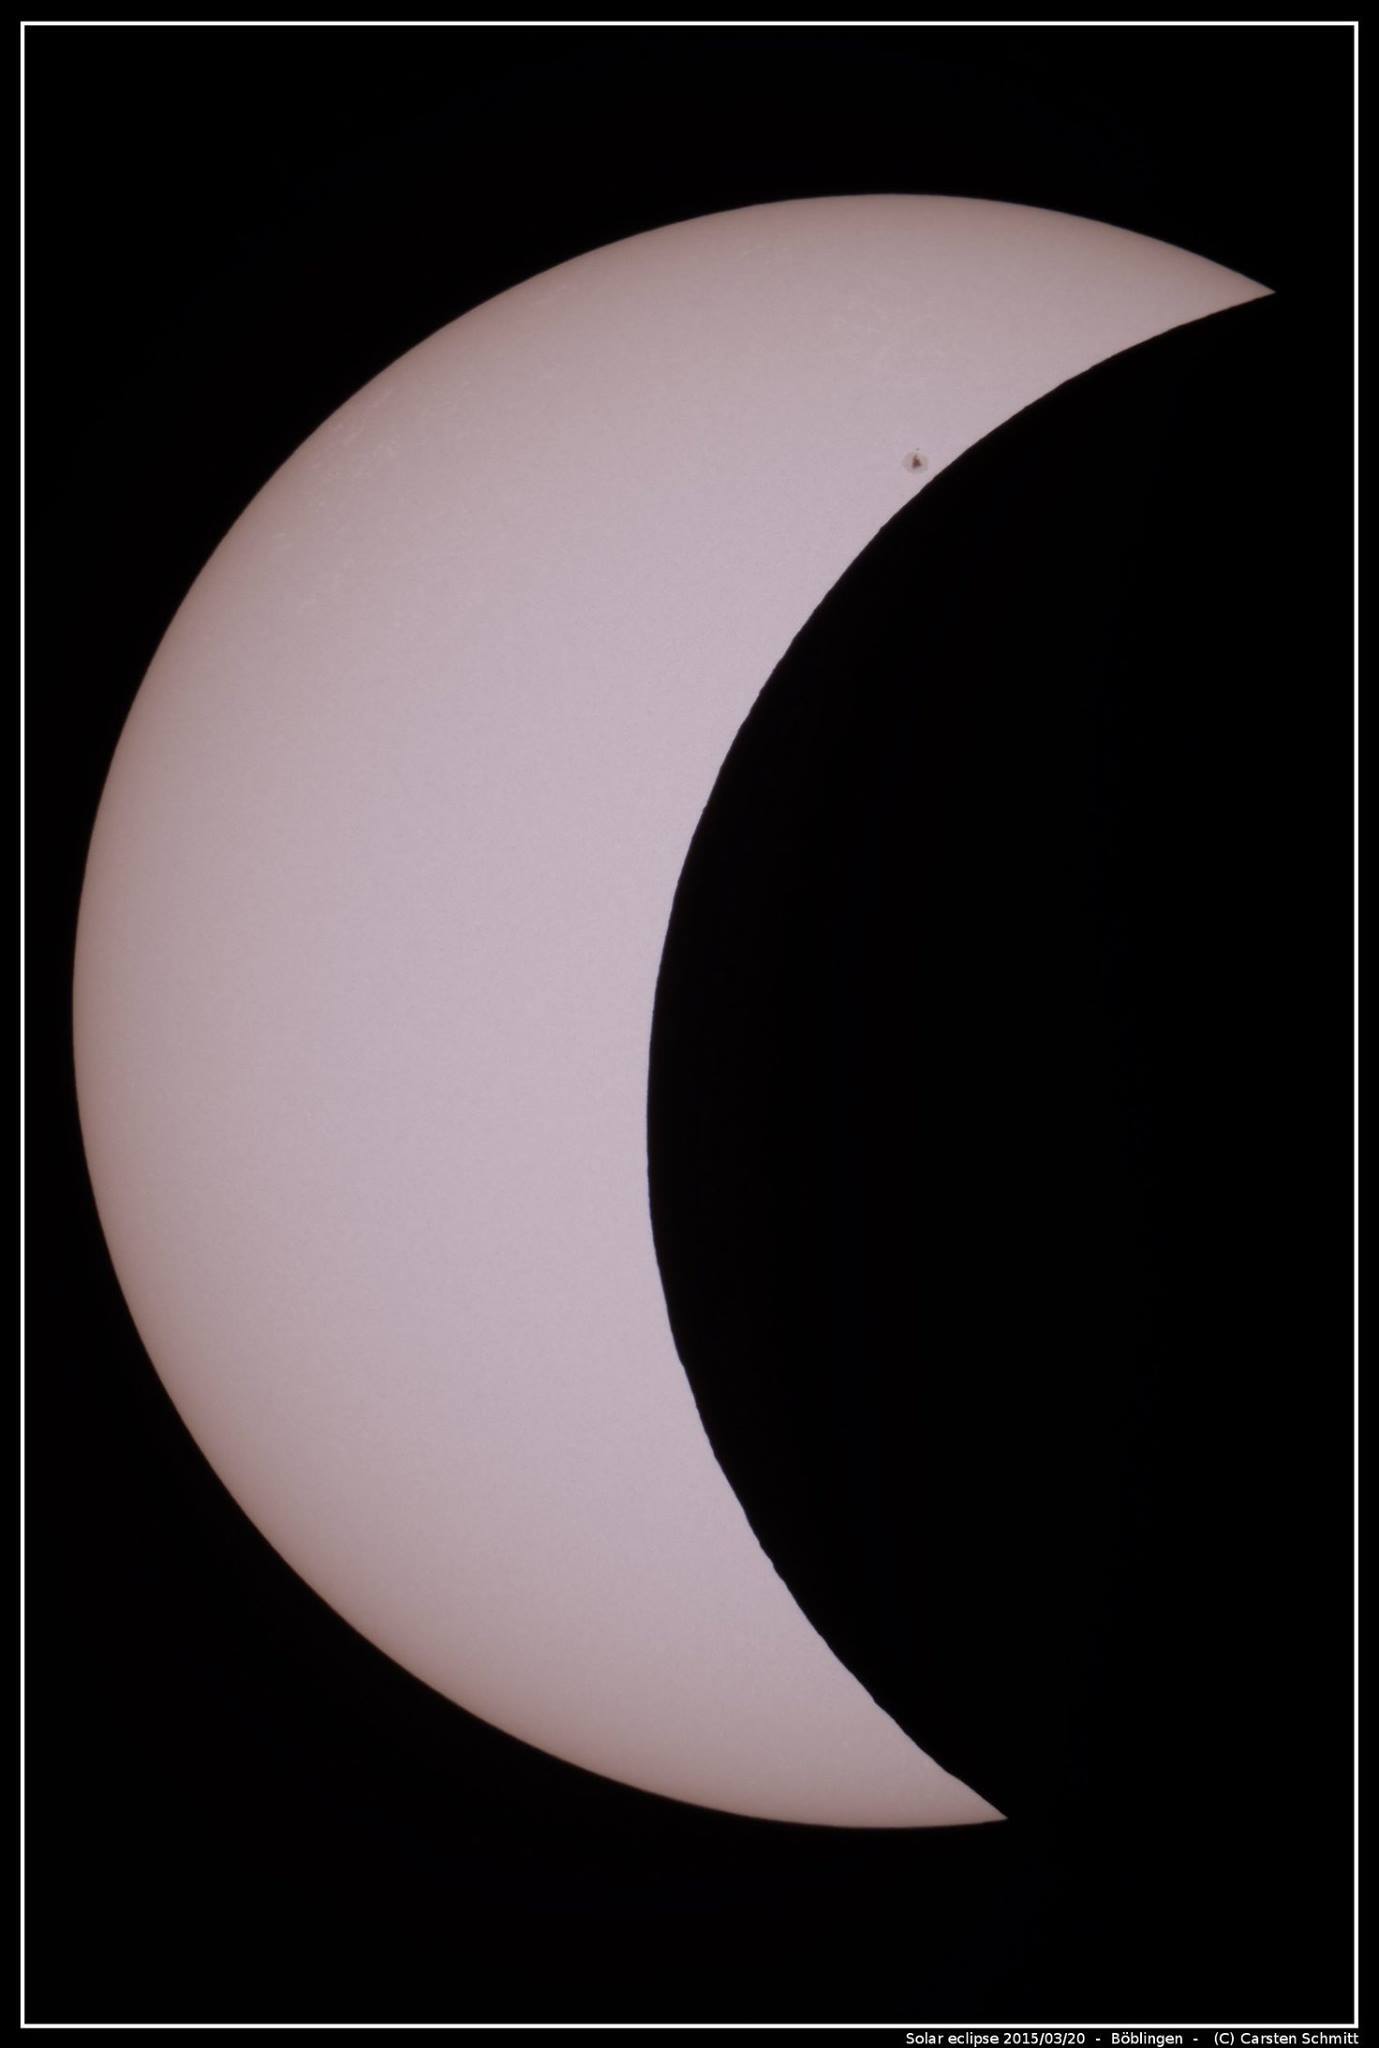 Solar eclipse 2015/03/20 from Böblingen / Germany